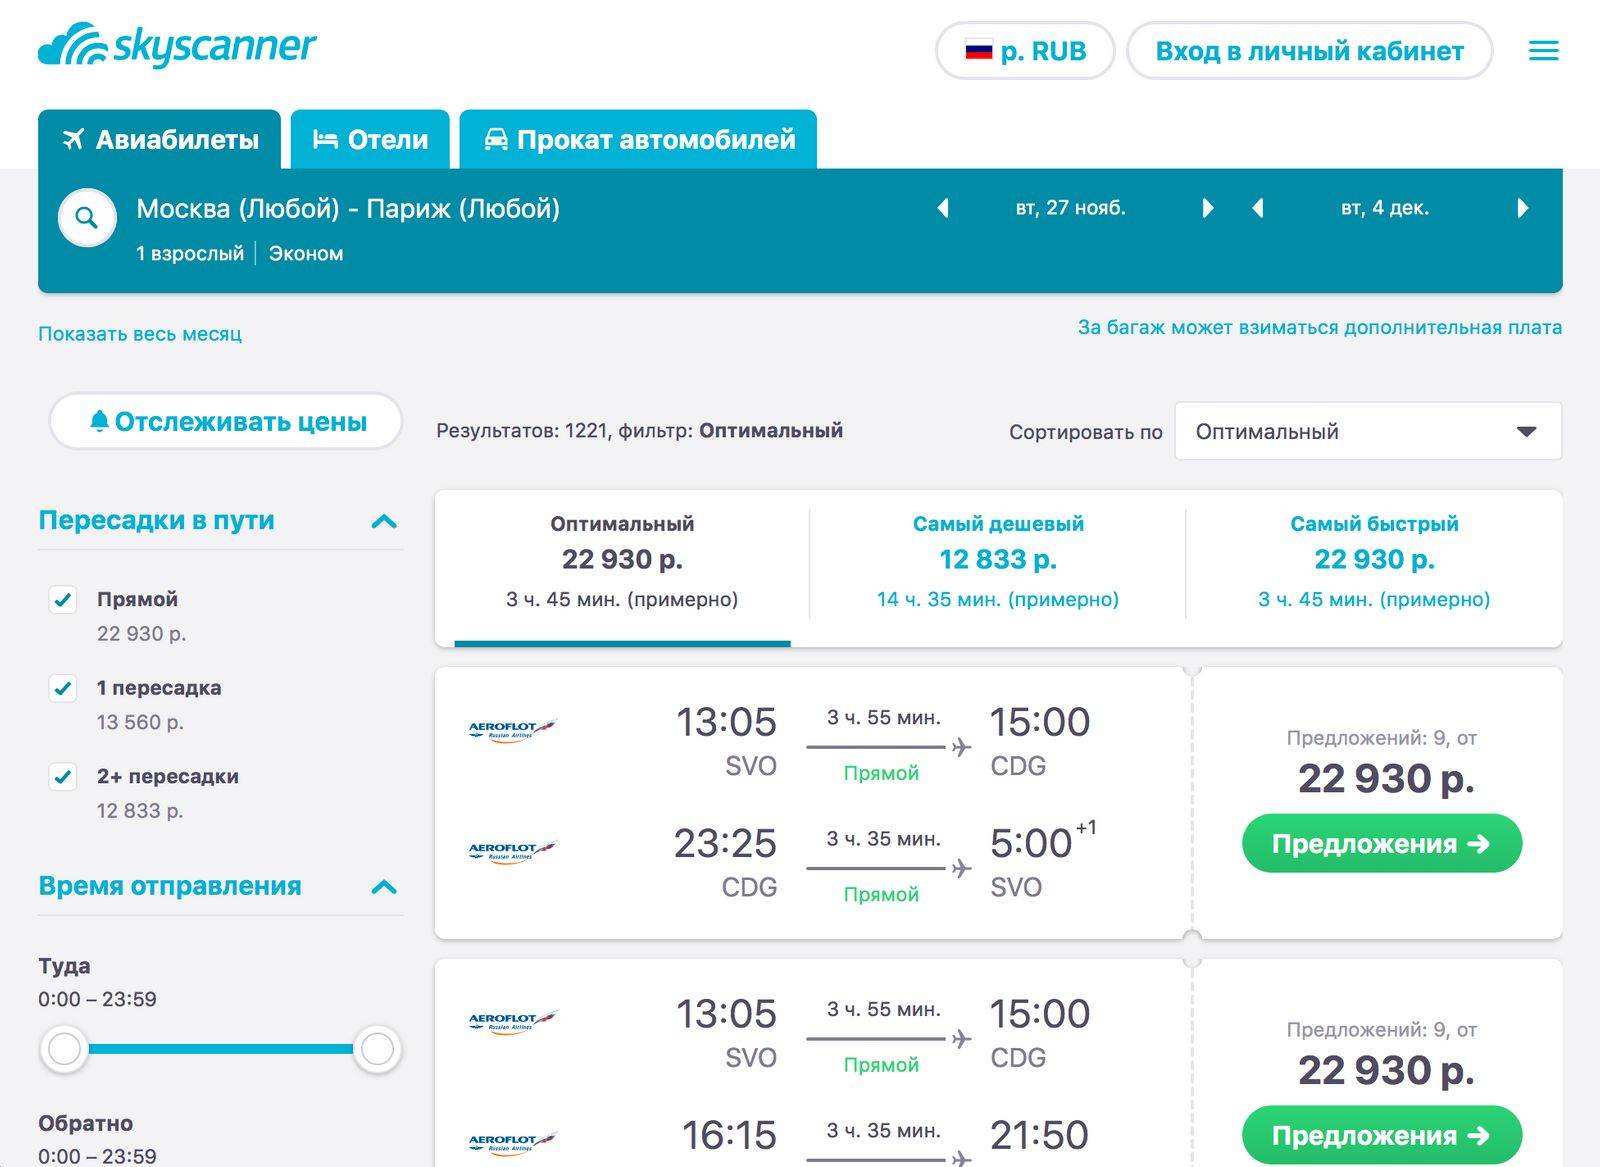 Авиабилеты kz цены цена билетов на самолет новосибирск краснодар